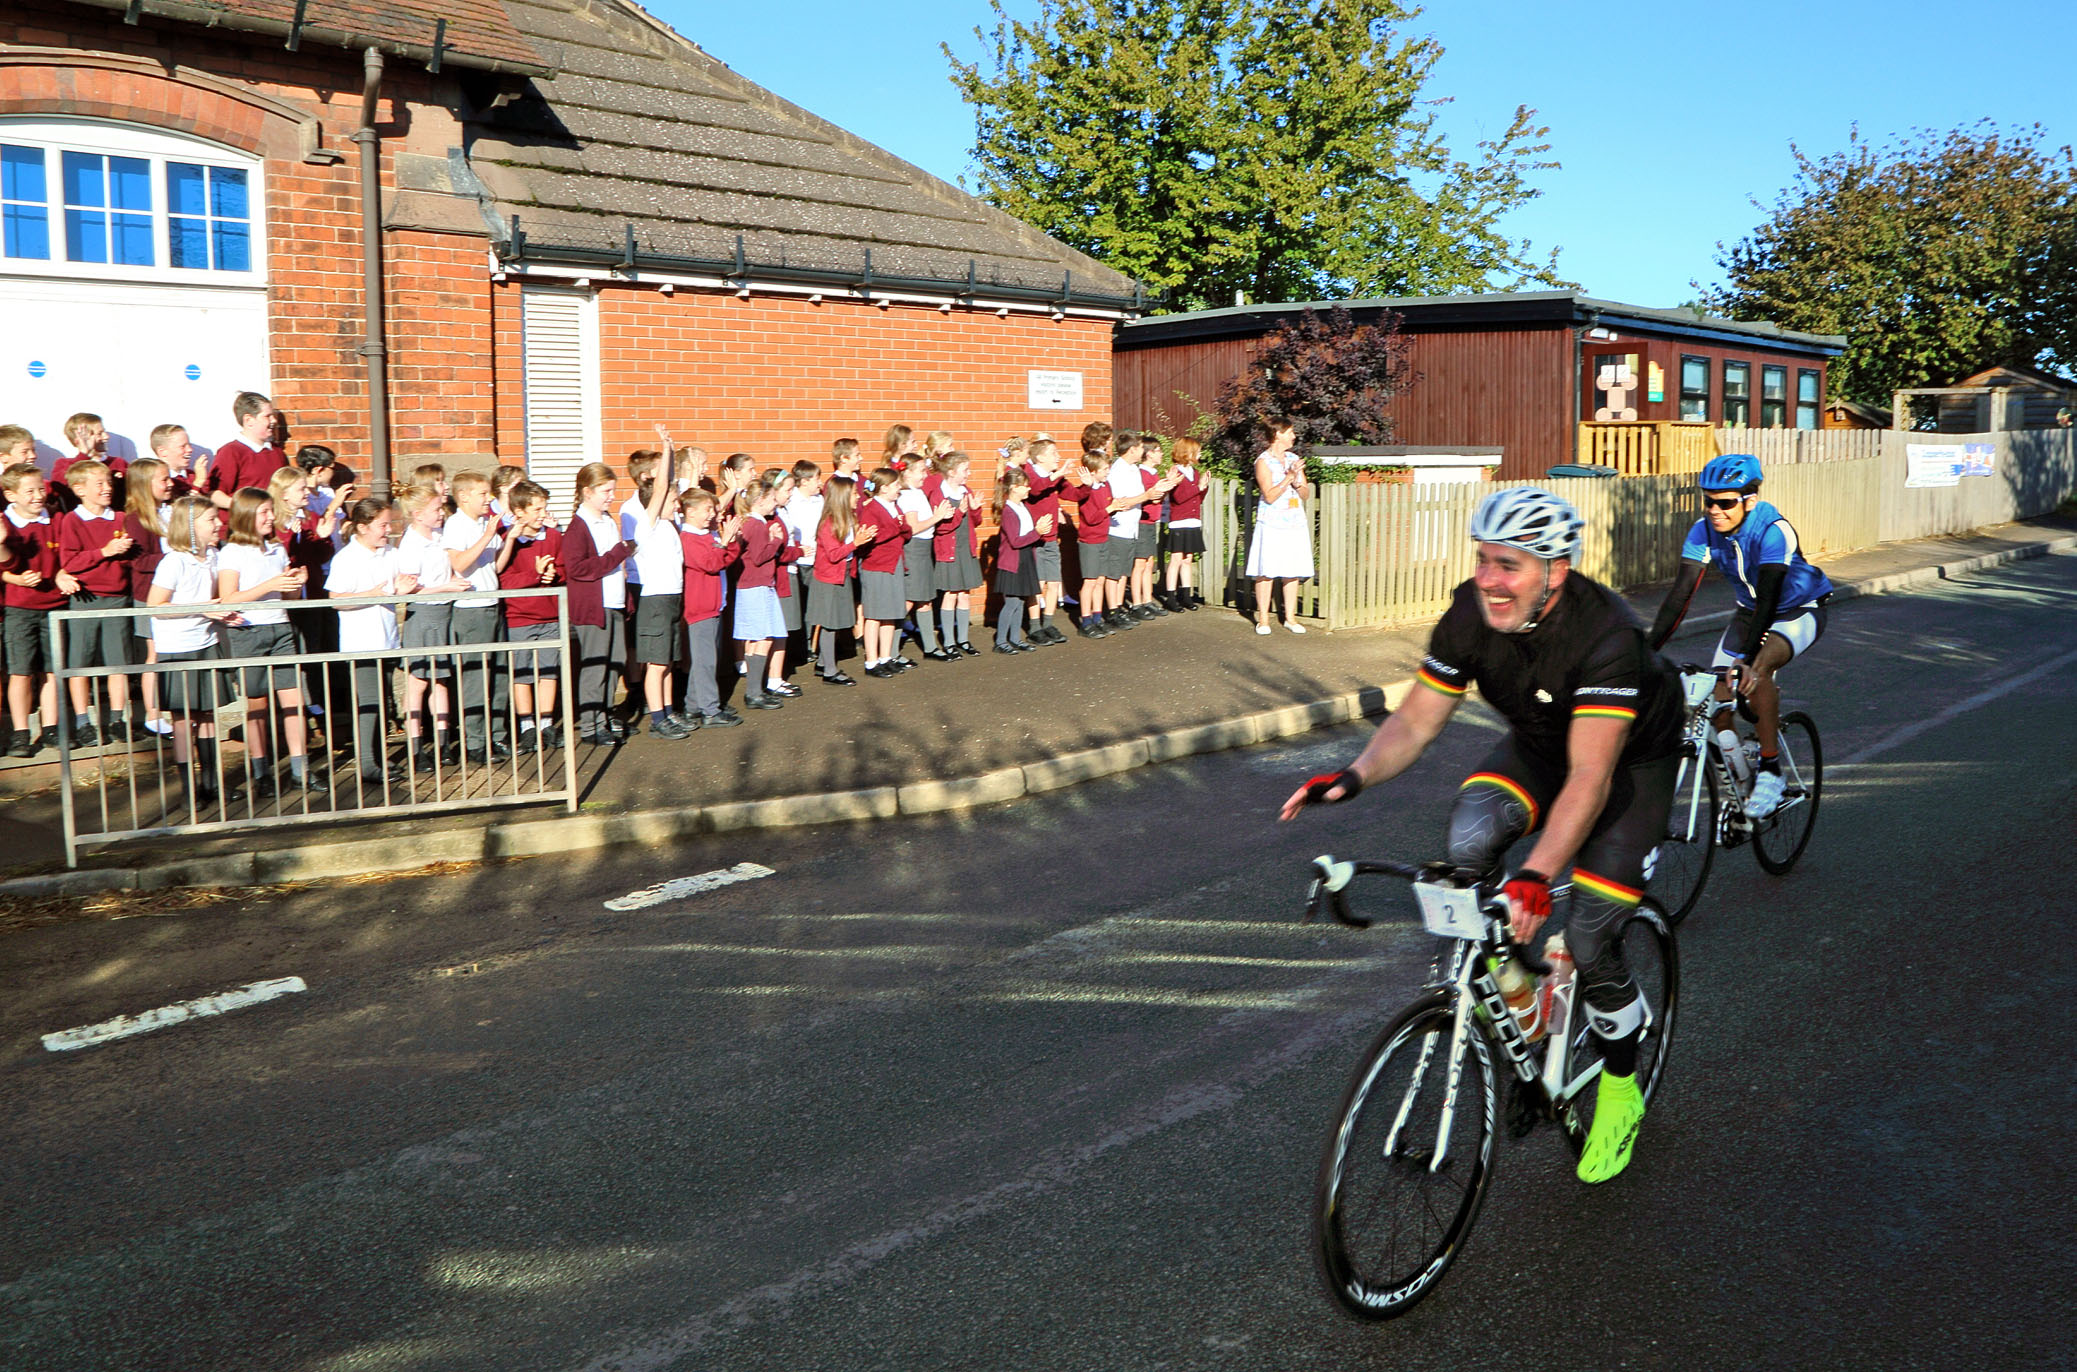 Primary schoolchildren from Condover School cheer cyclists en route